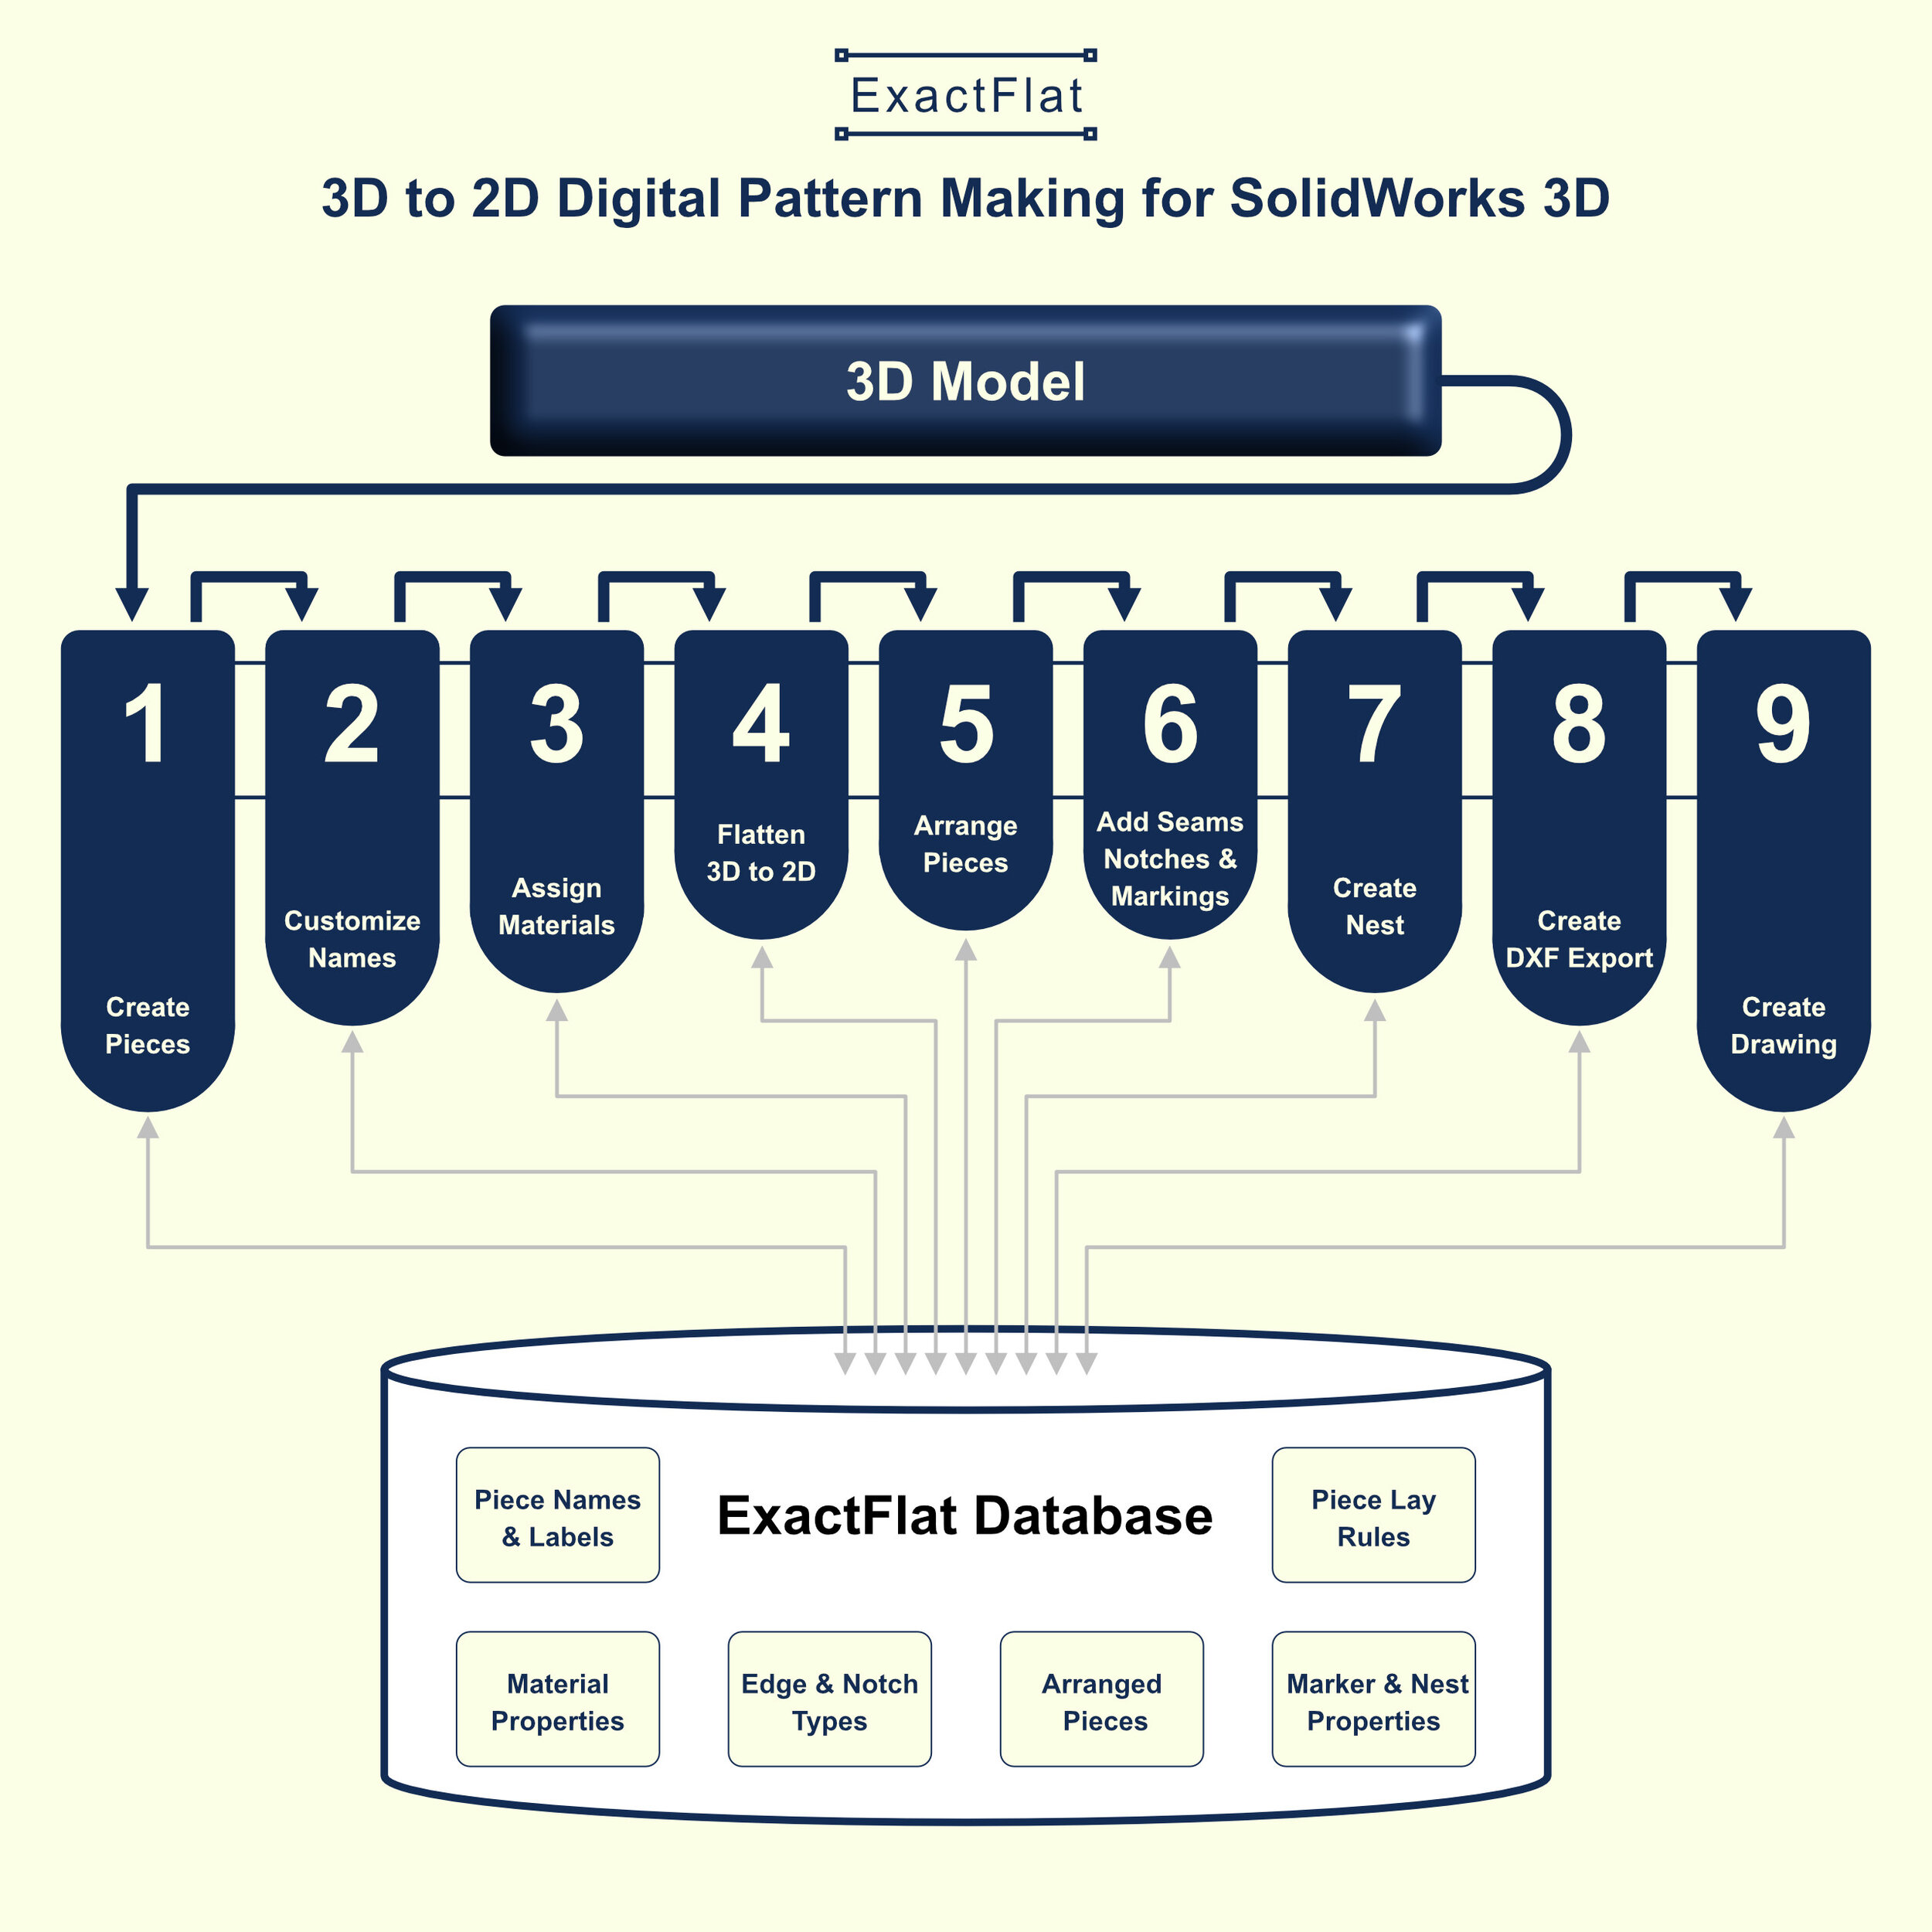 Diagram illustrating the 9 steps of 3D to 2D digital pattern making workflow